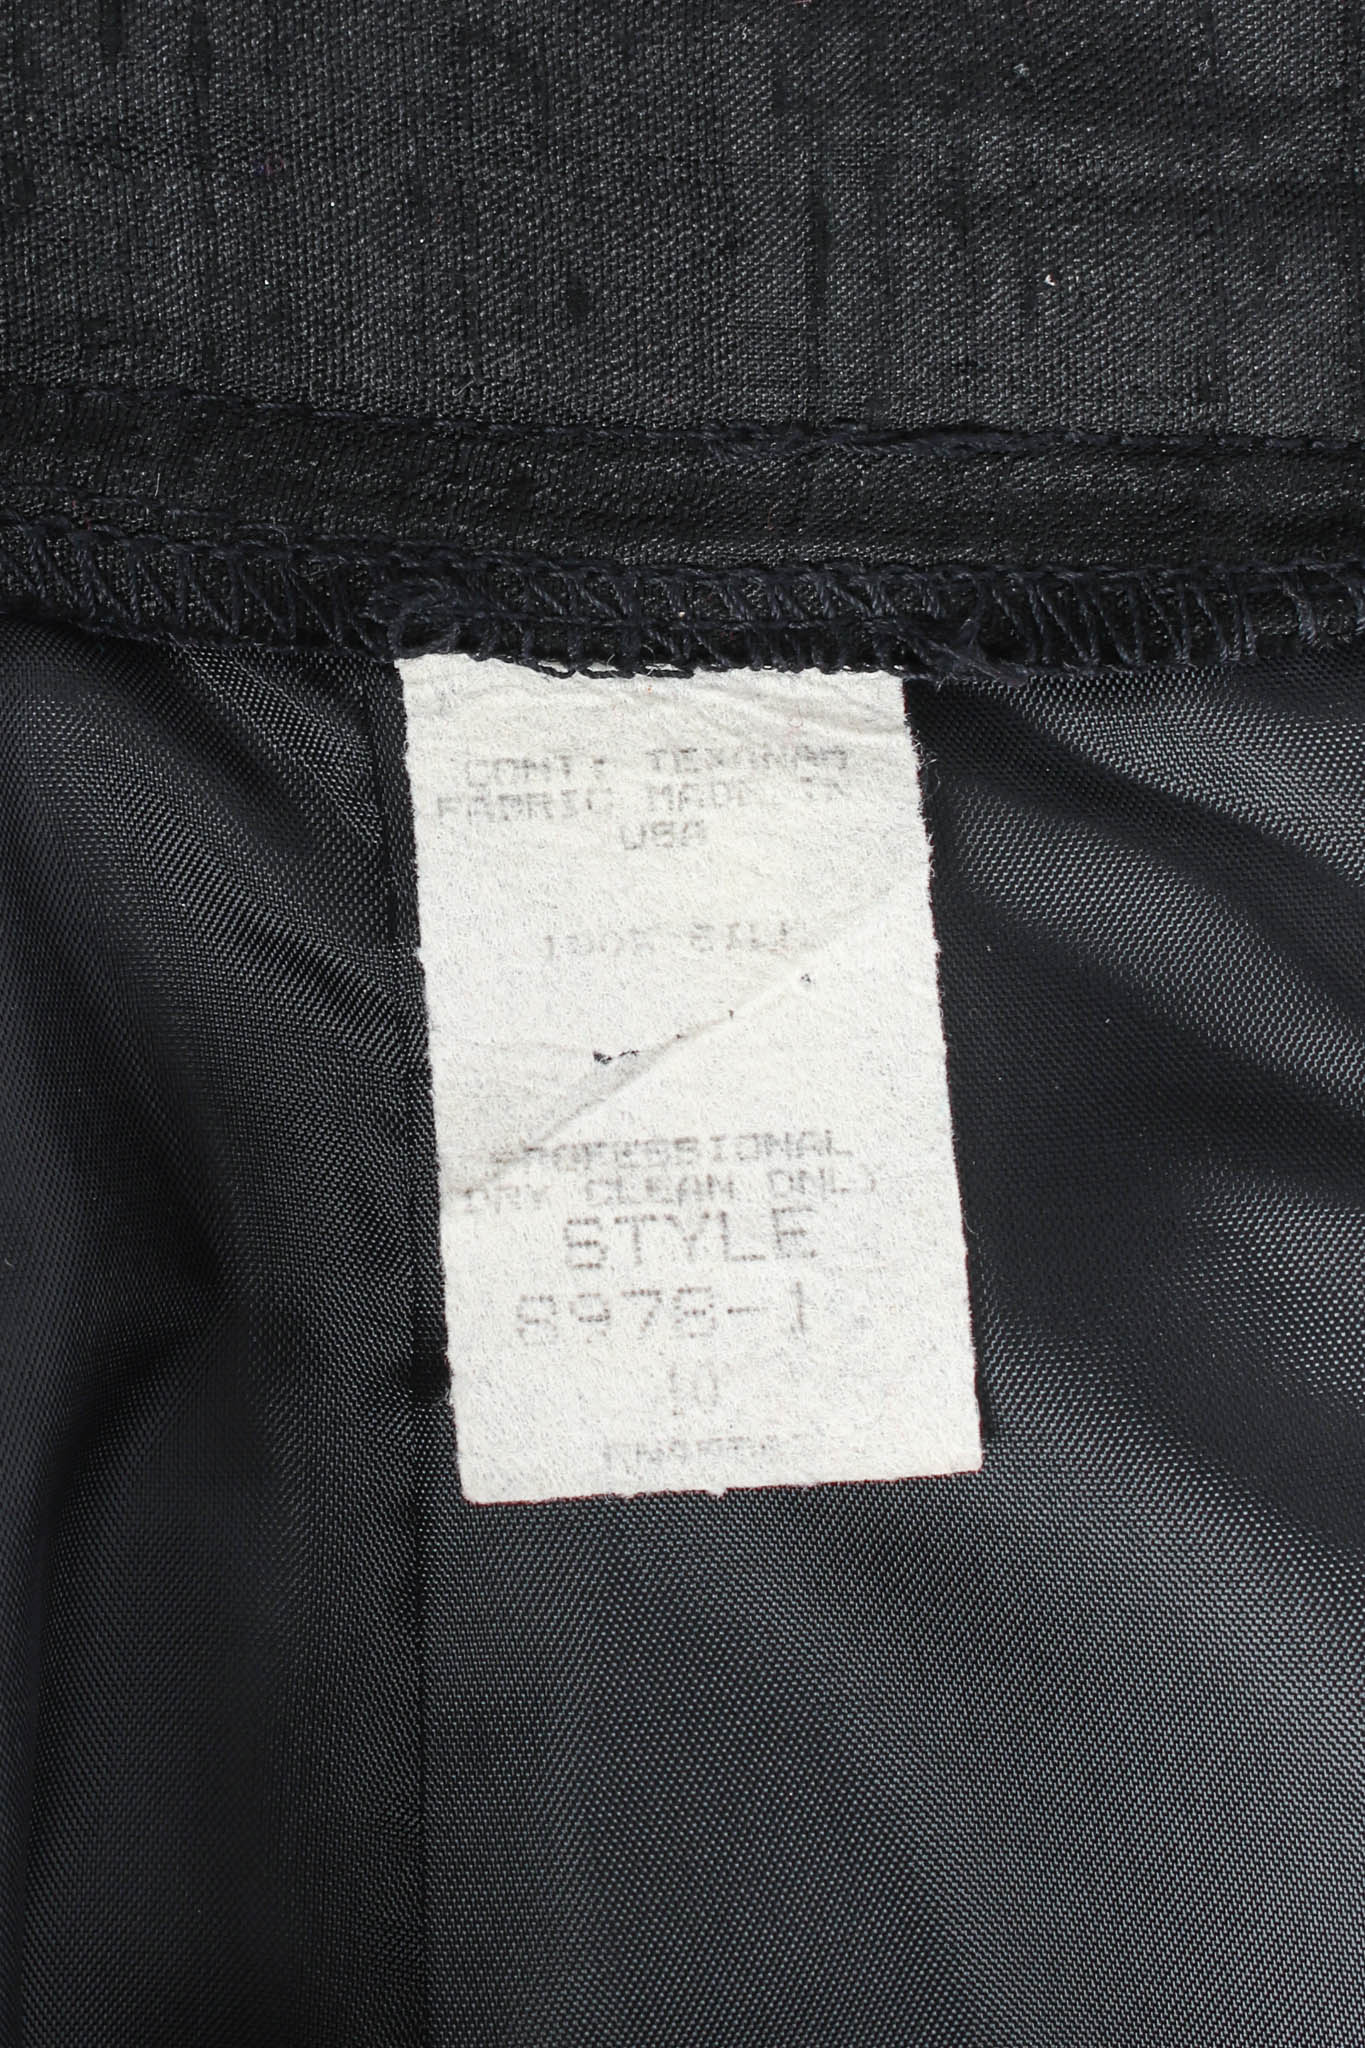 Vintage Victor Costa Rhinestone Floral Silk Jacket & Skirt Set tag @ Recess LA